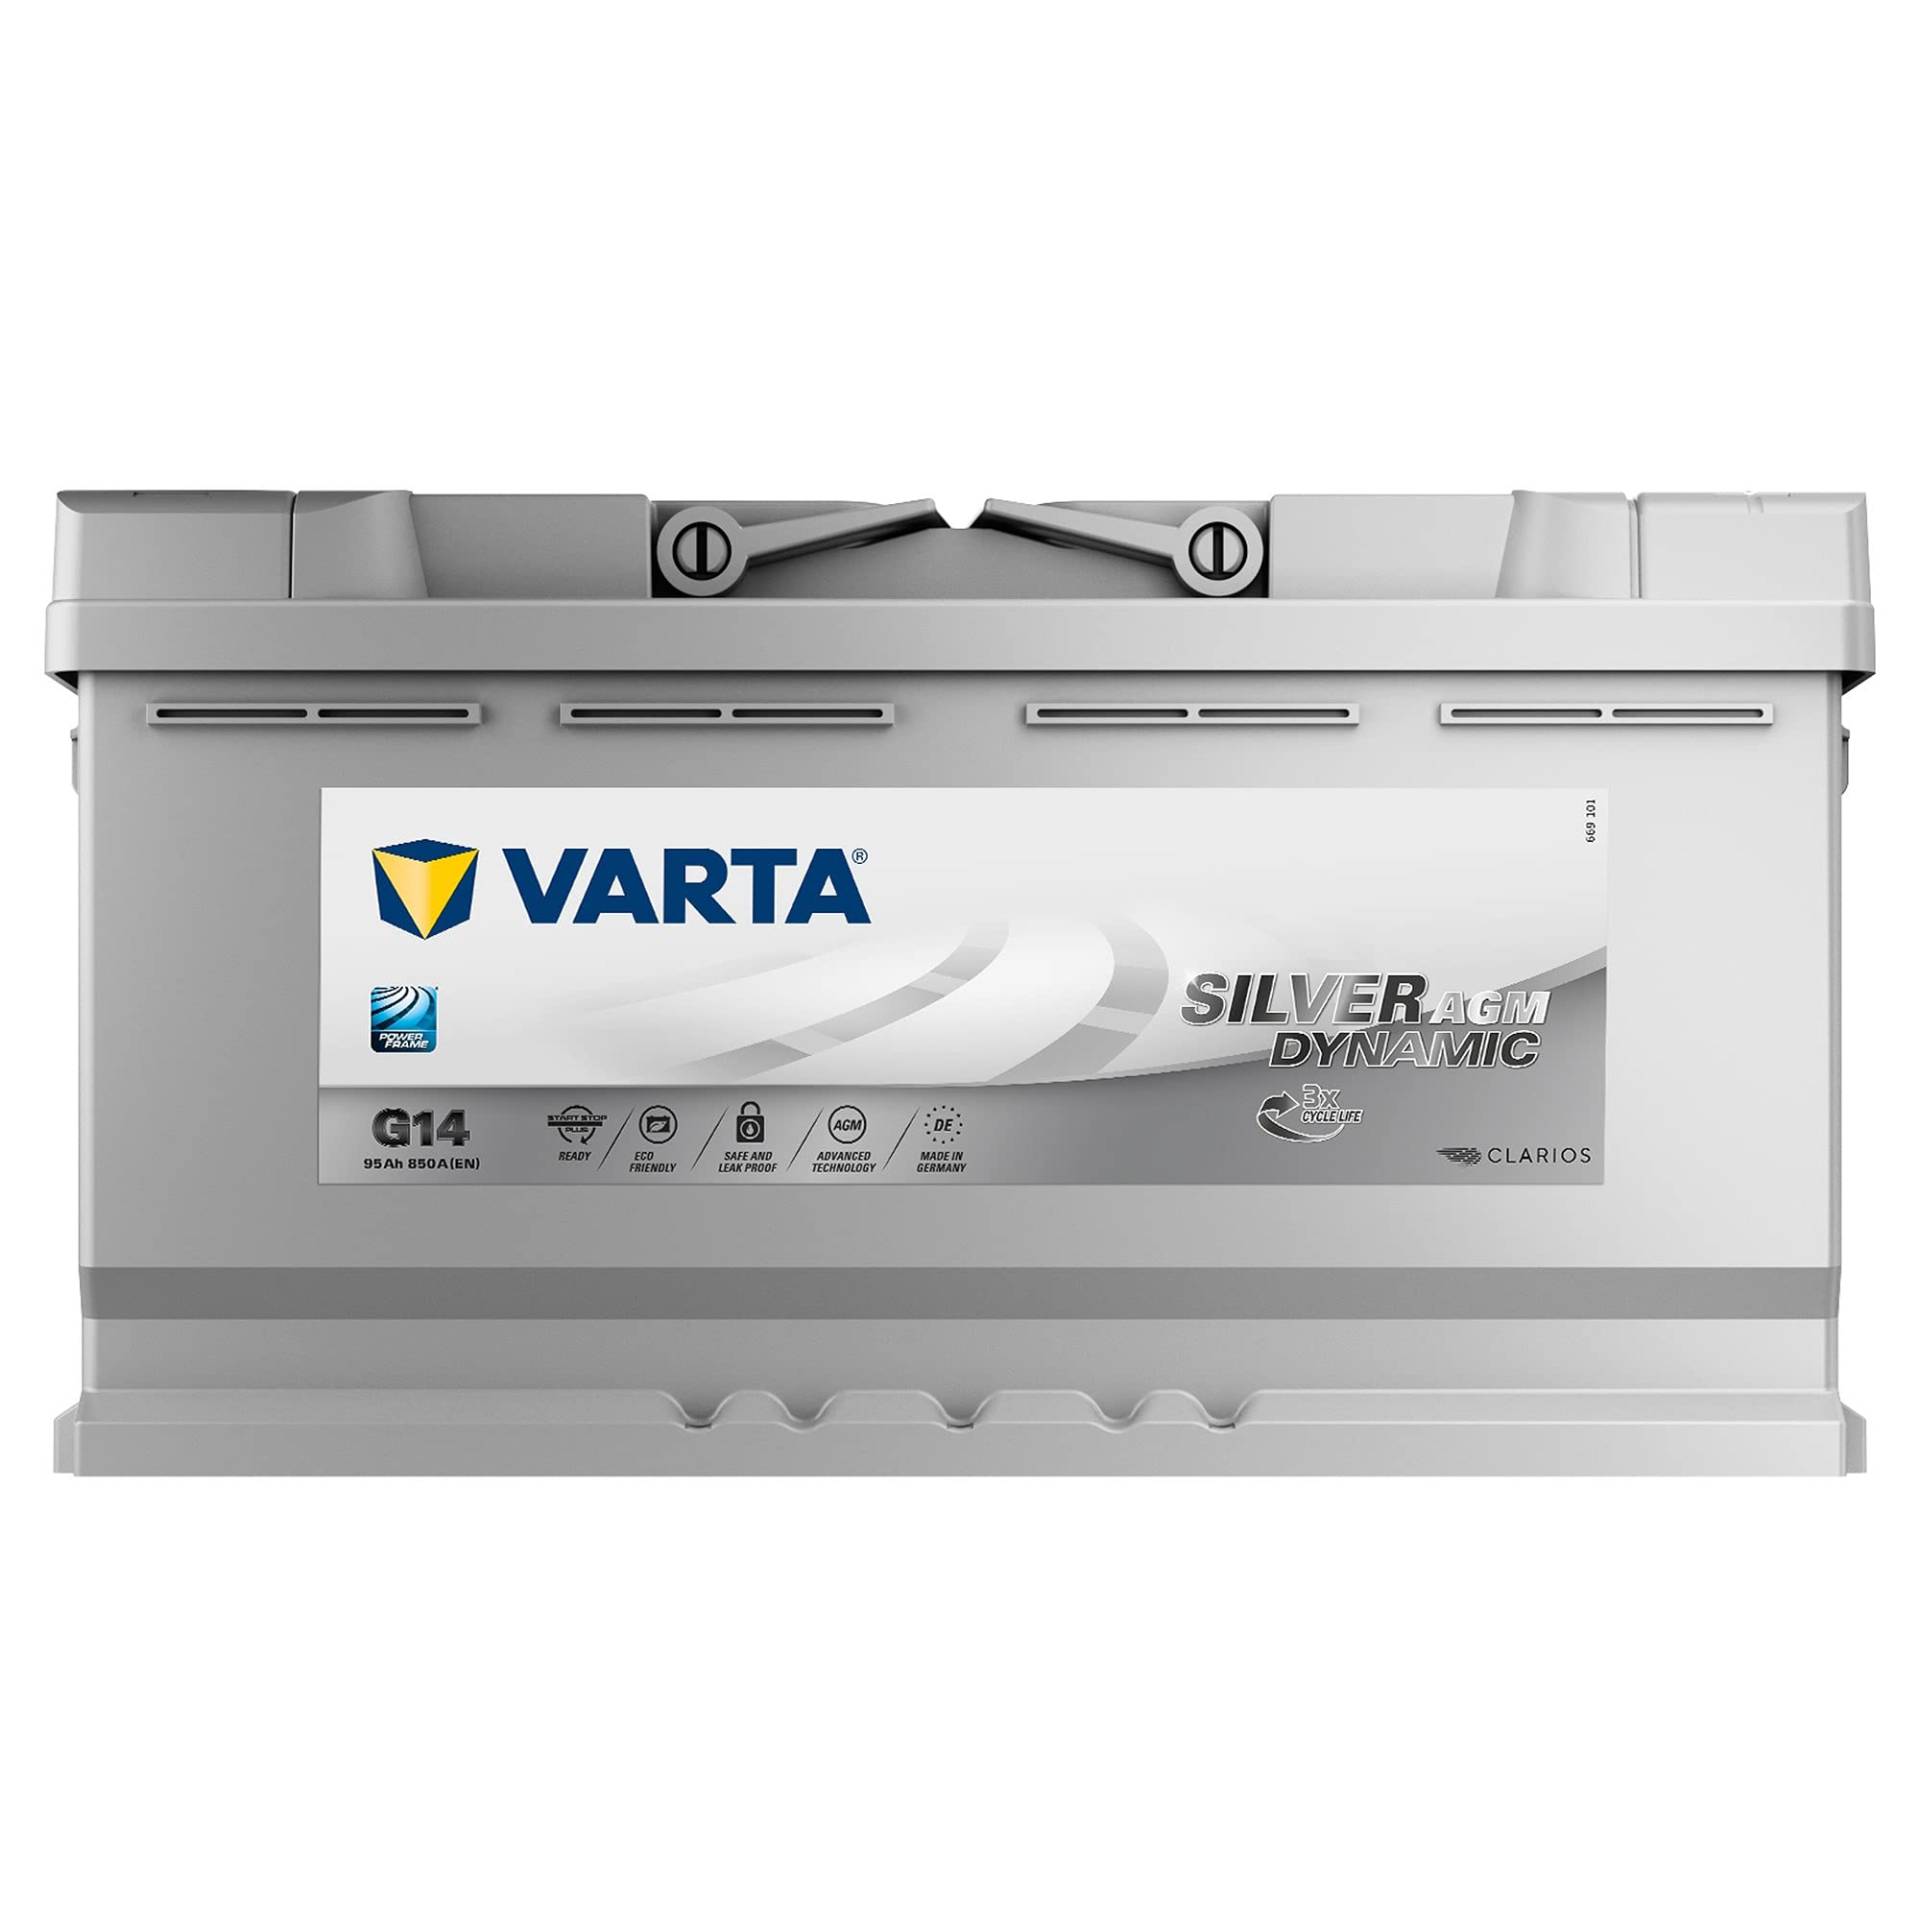 Varta A5 Silver Dynamic AGM 595901085D852 Autobatterie 12V 95Ah /850A,weiß, mit PKW von Varta